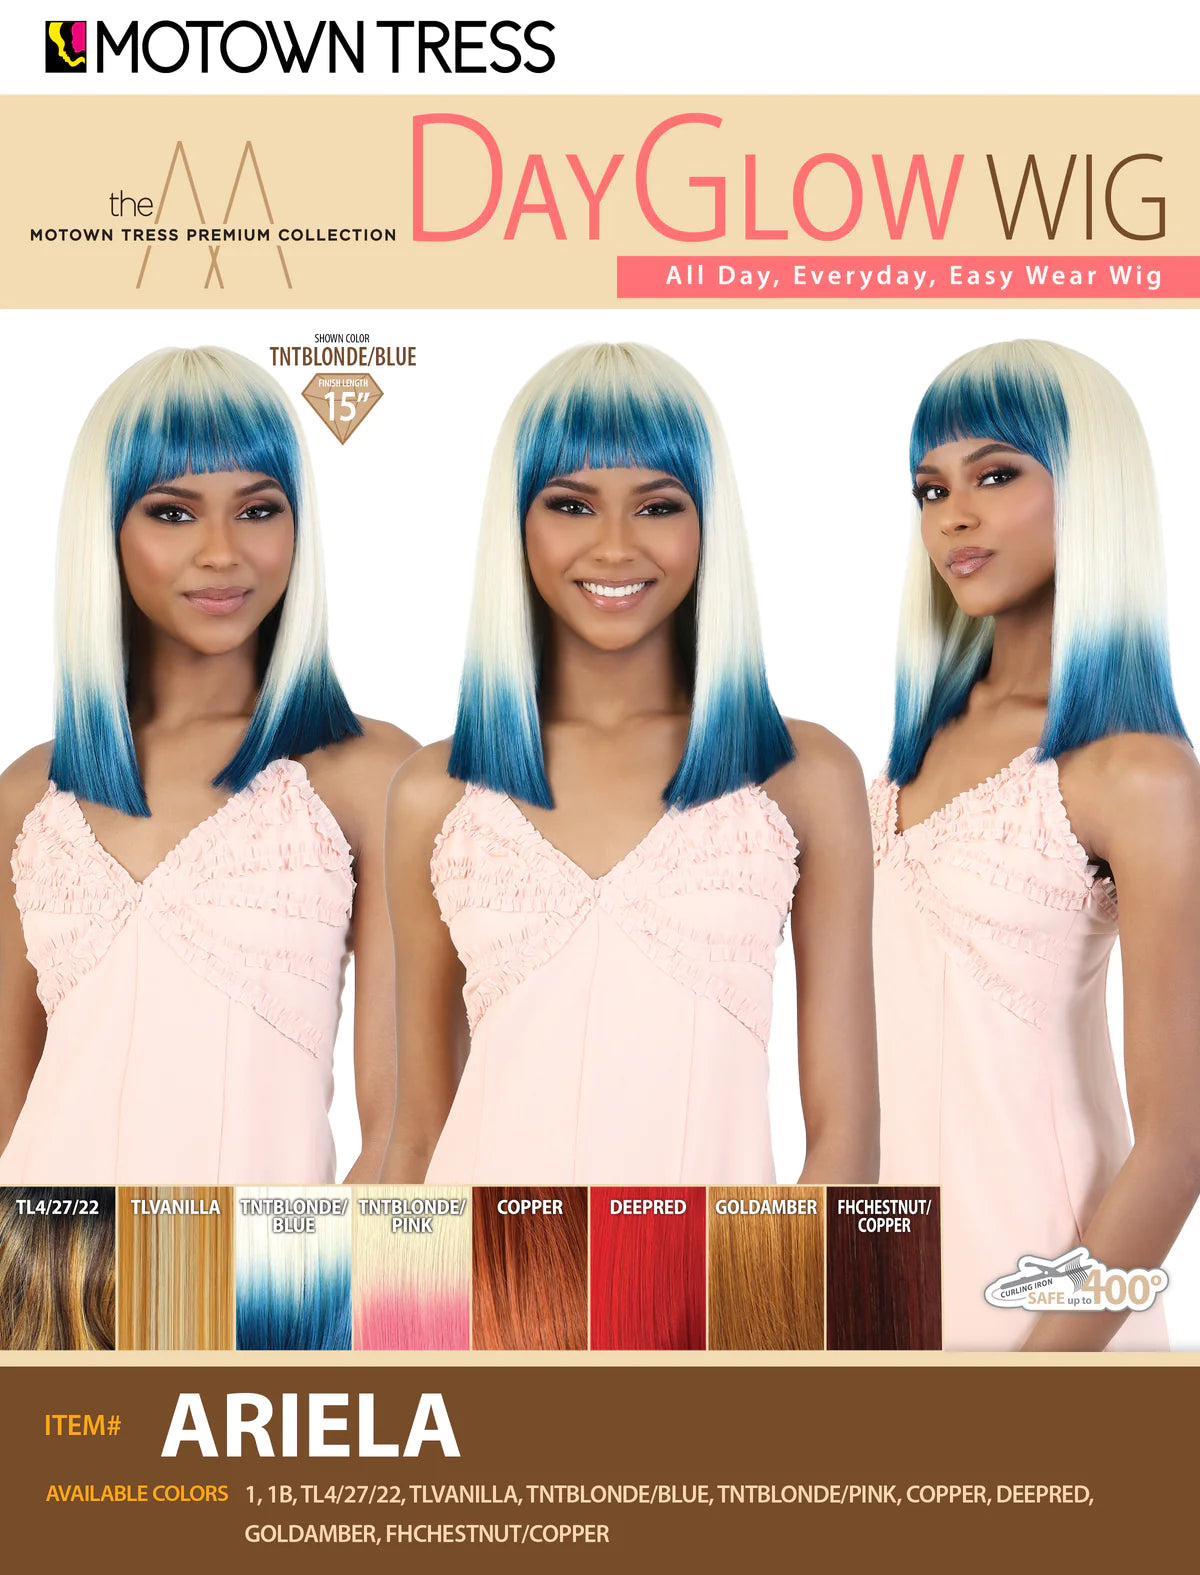 Motown Tress Day Glow Wig Ariela - Elevate Styles